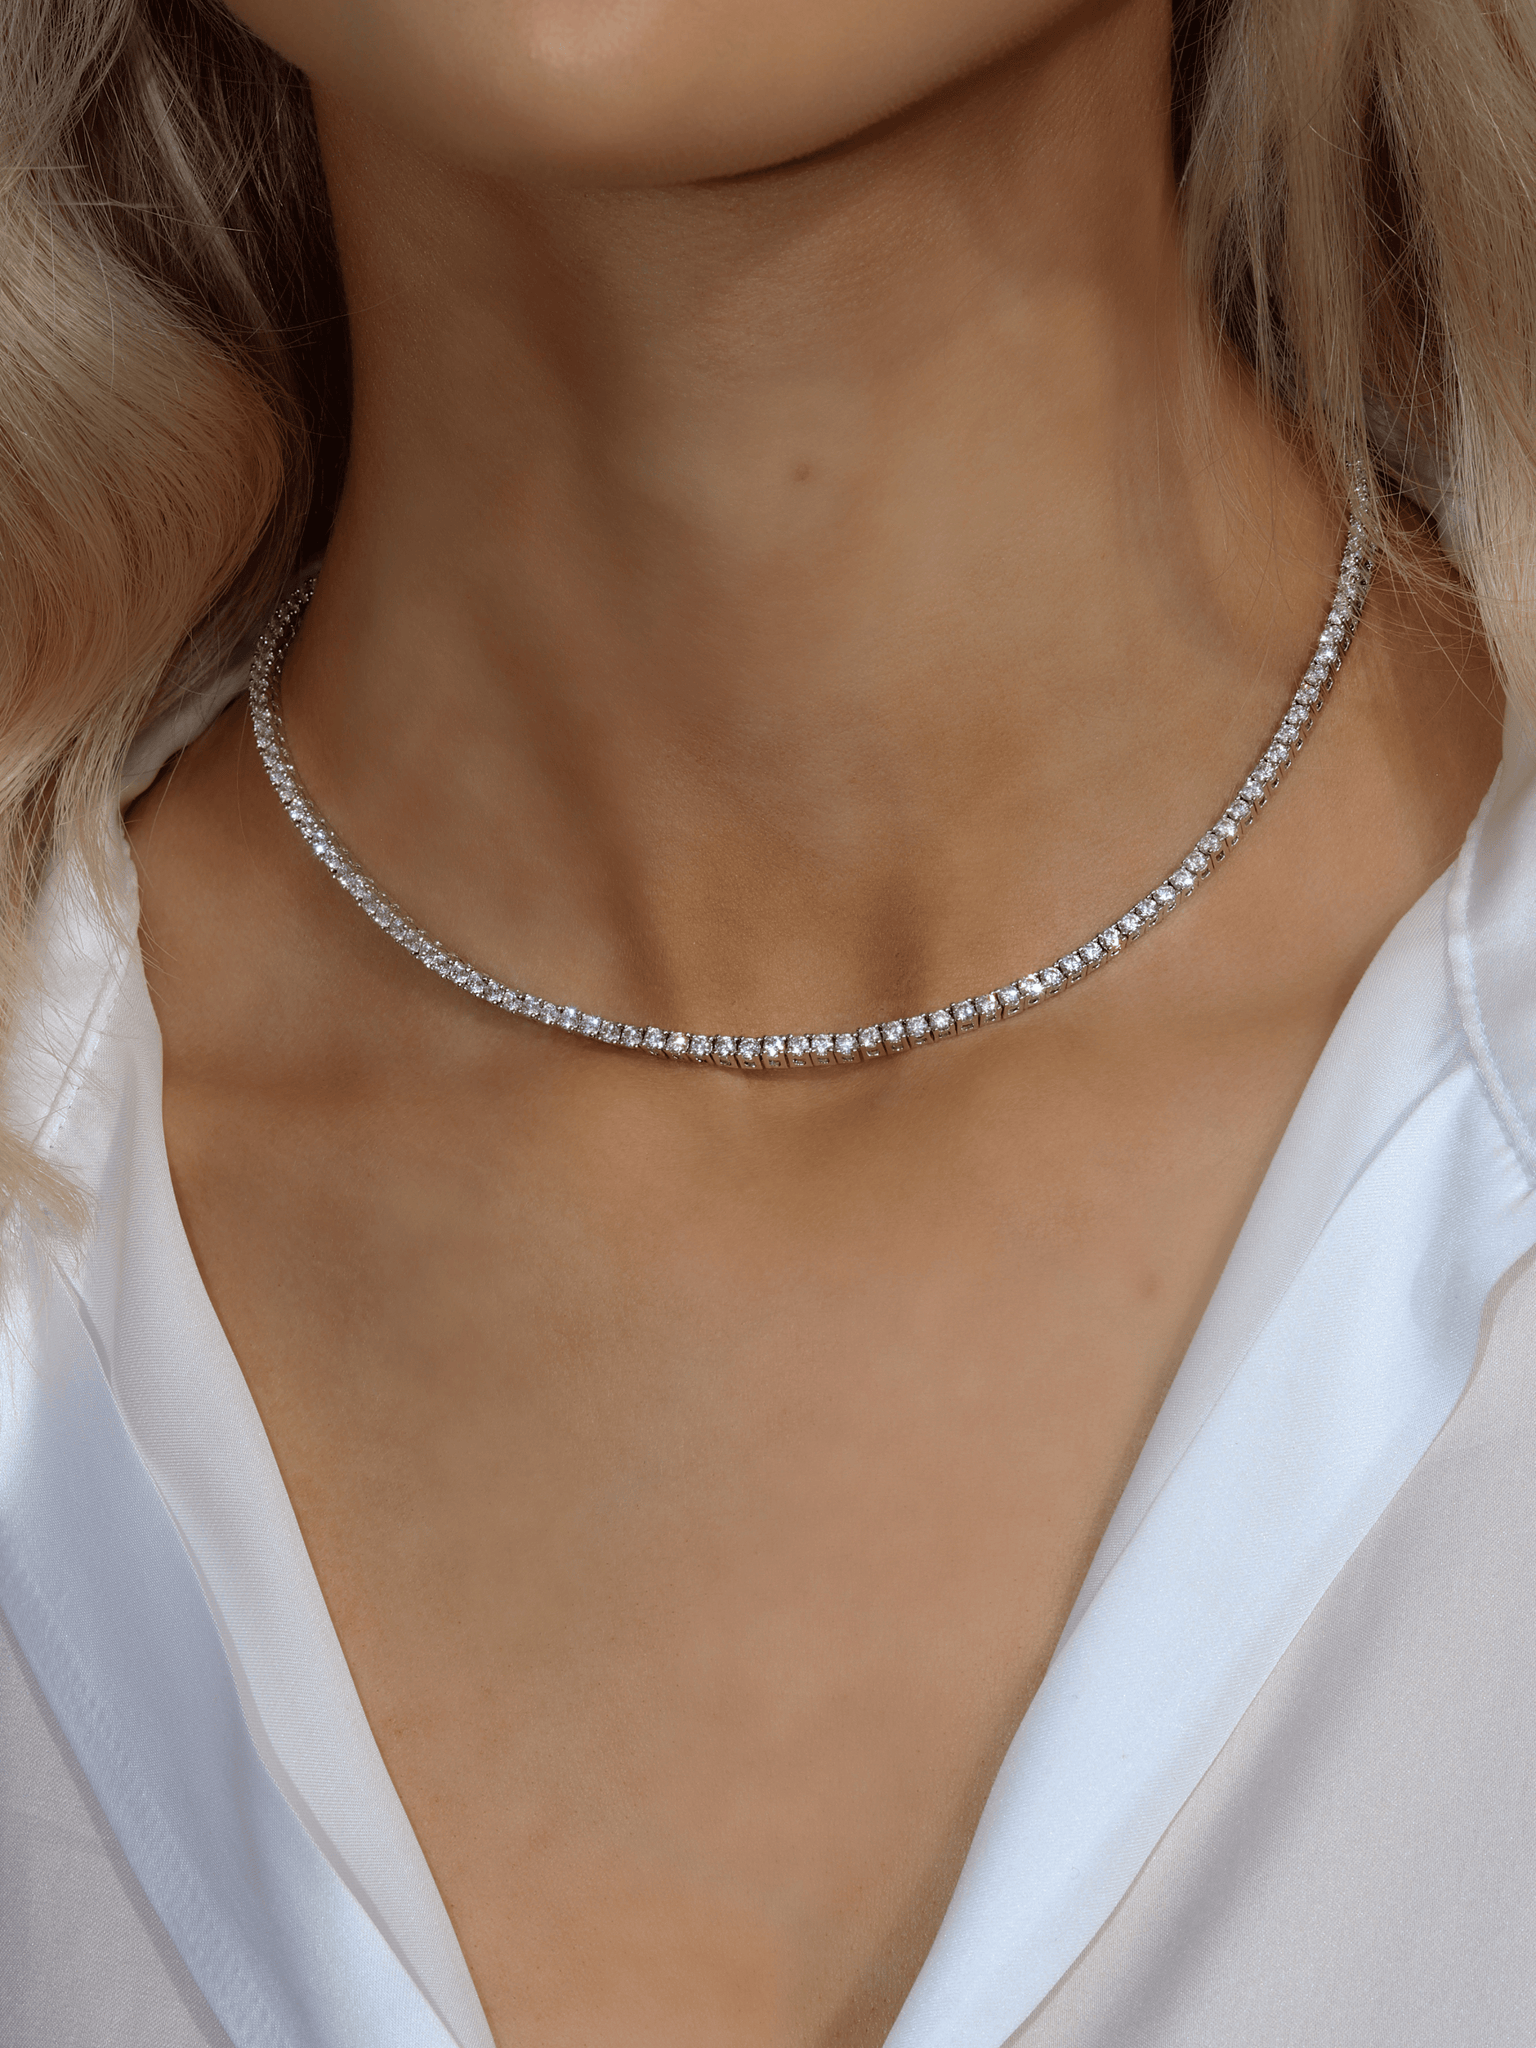 Celeste Tennis Necklace - Silver